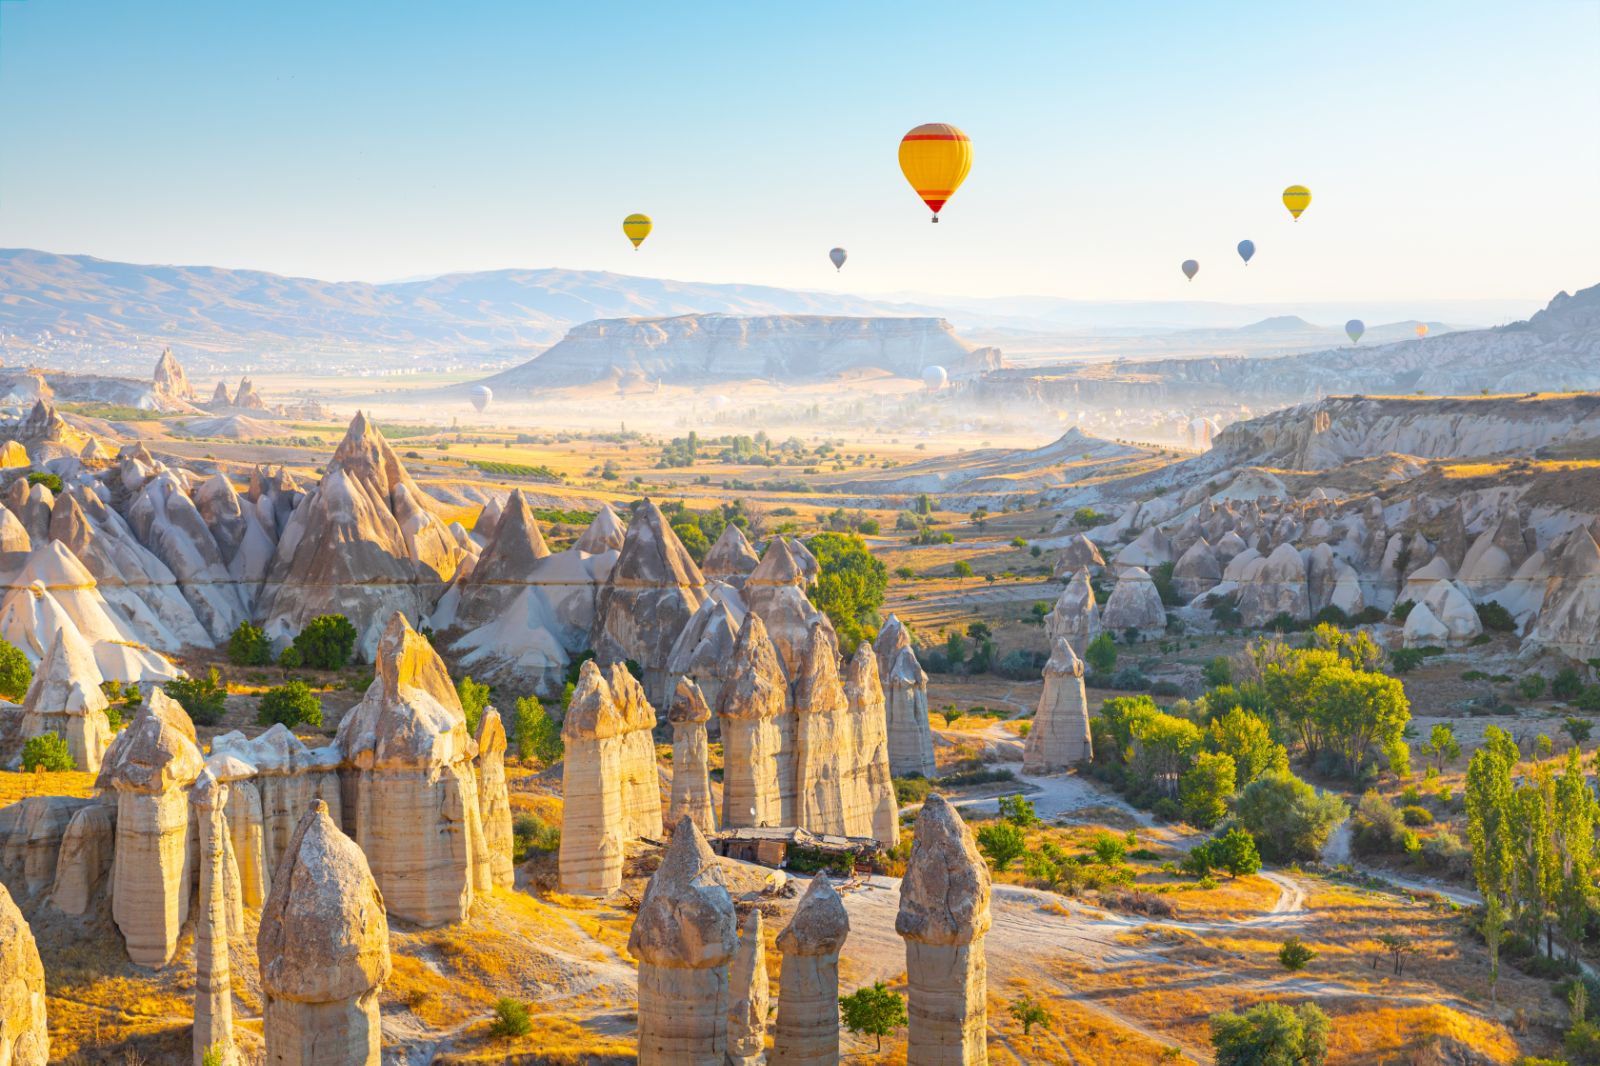 Hot air balloons over Cappadocia in Turkey